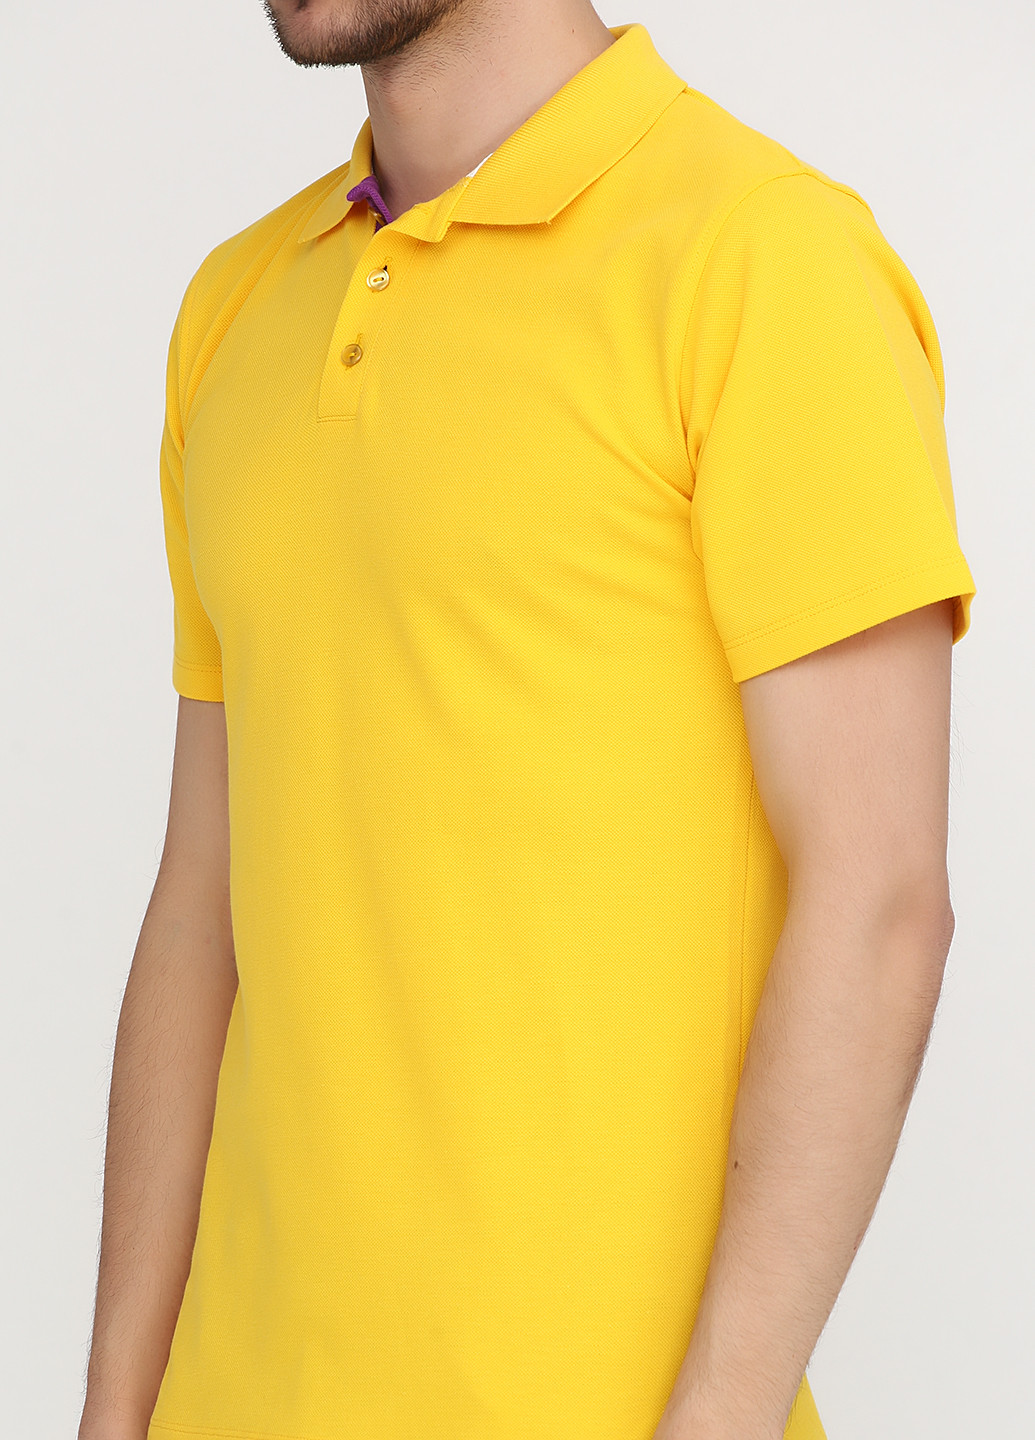 Желтая футболка-поло для мужчин Sylvester однотонная